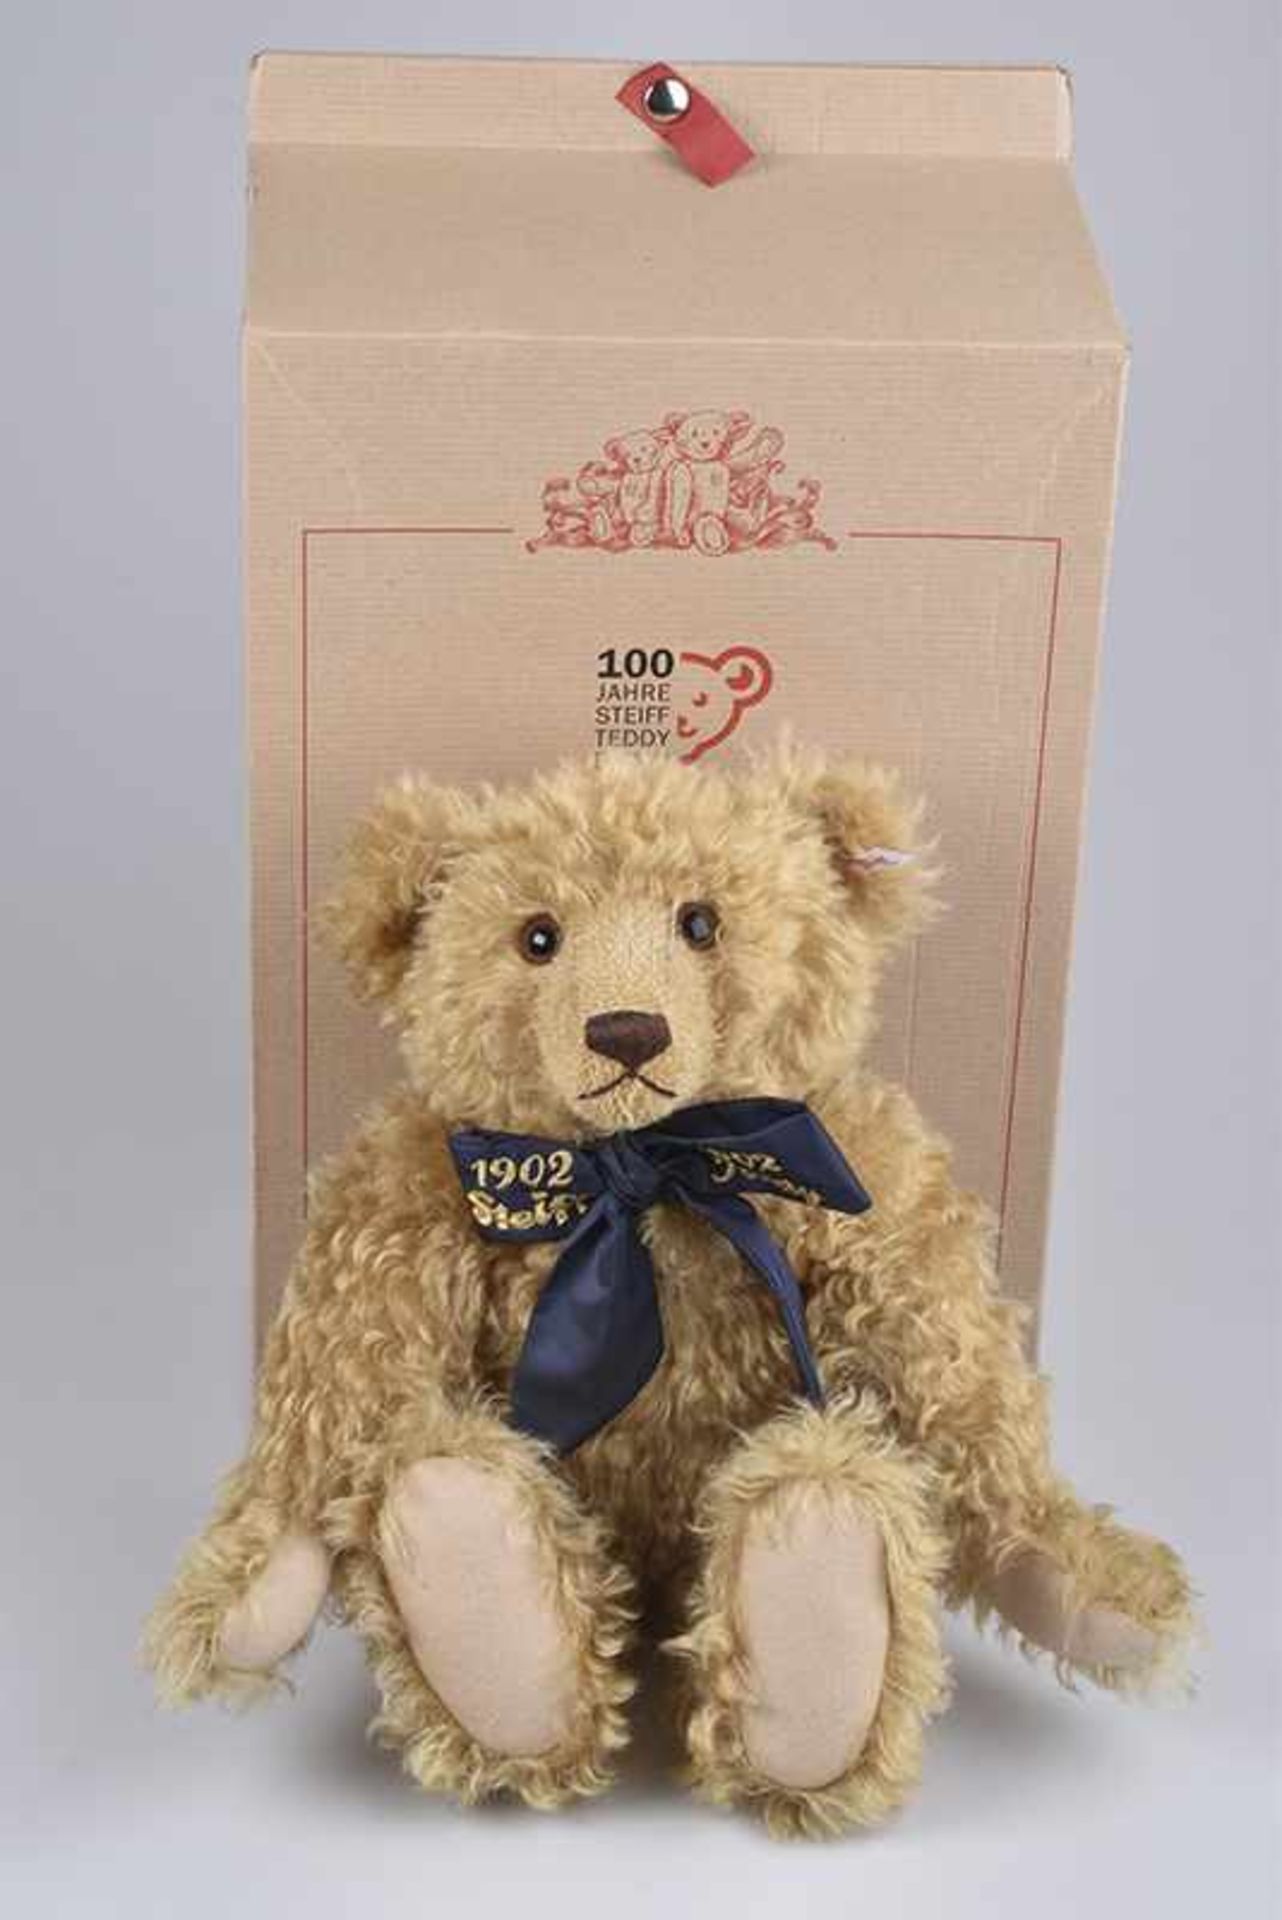 STEIFF Jubiläums-Teddybär, KF, Nr. 670985, zum 100. Geburtstag des Teddybären 2002, limitierte